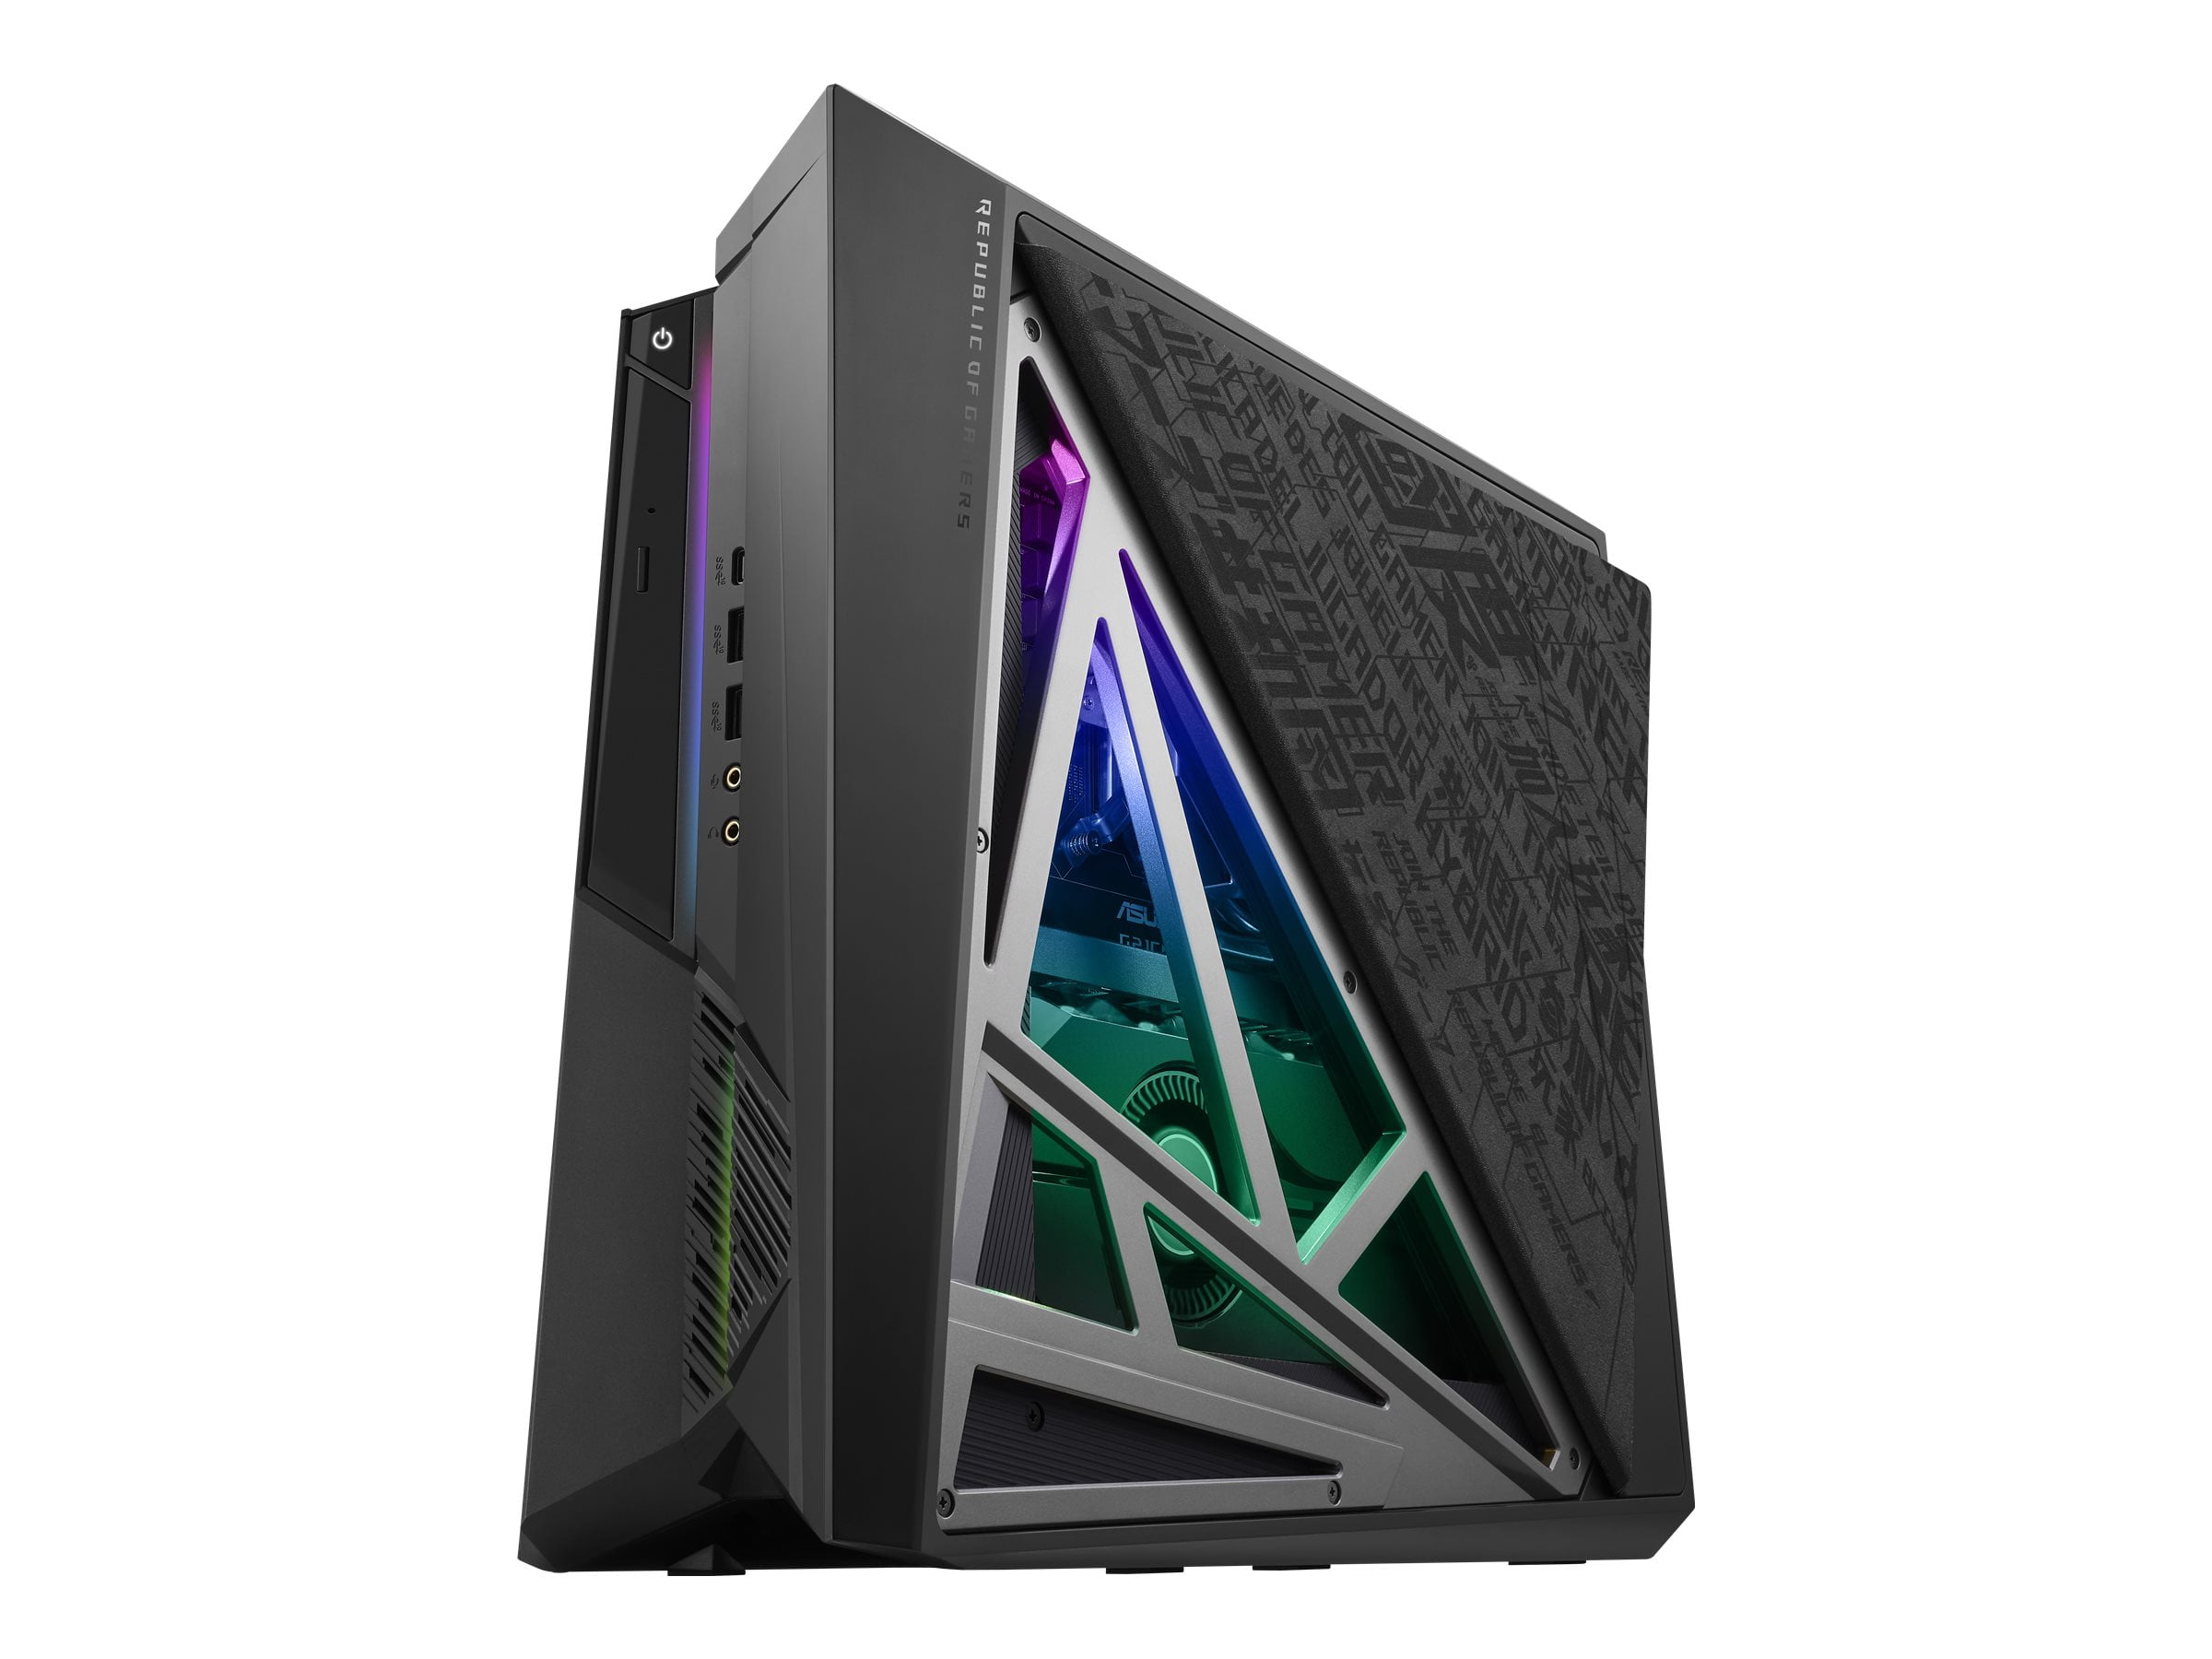 ASUS ROG Gaming Desktop, Intel Core i7-8700, NVIDIA GeForce GTX 